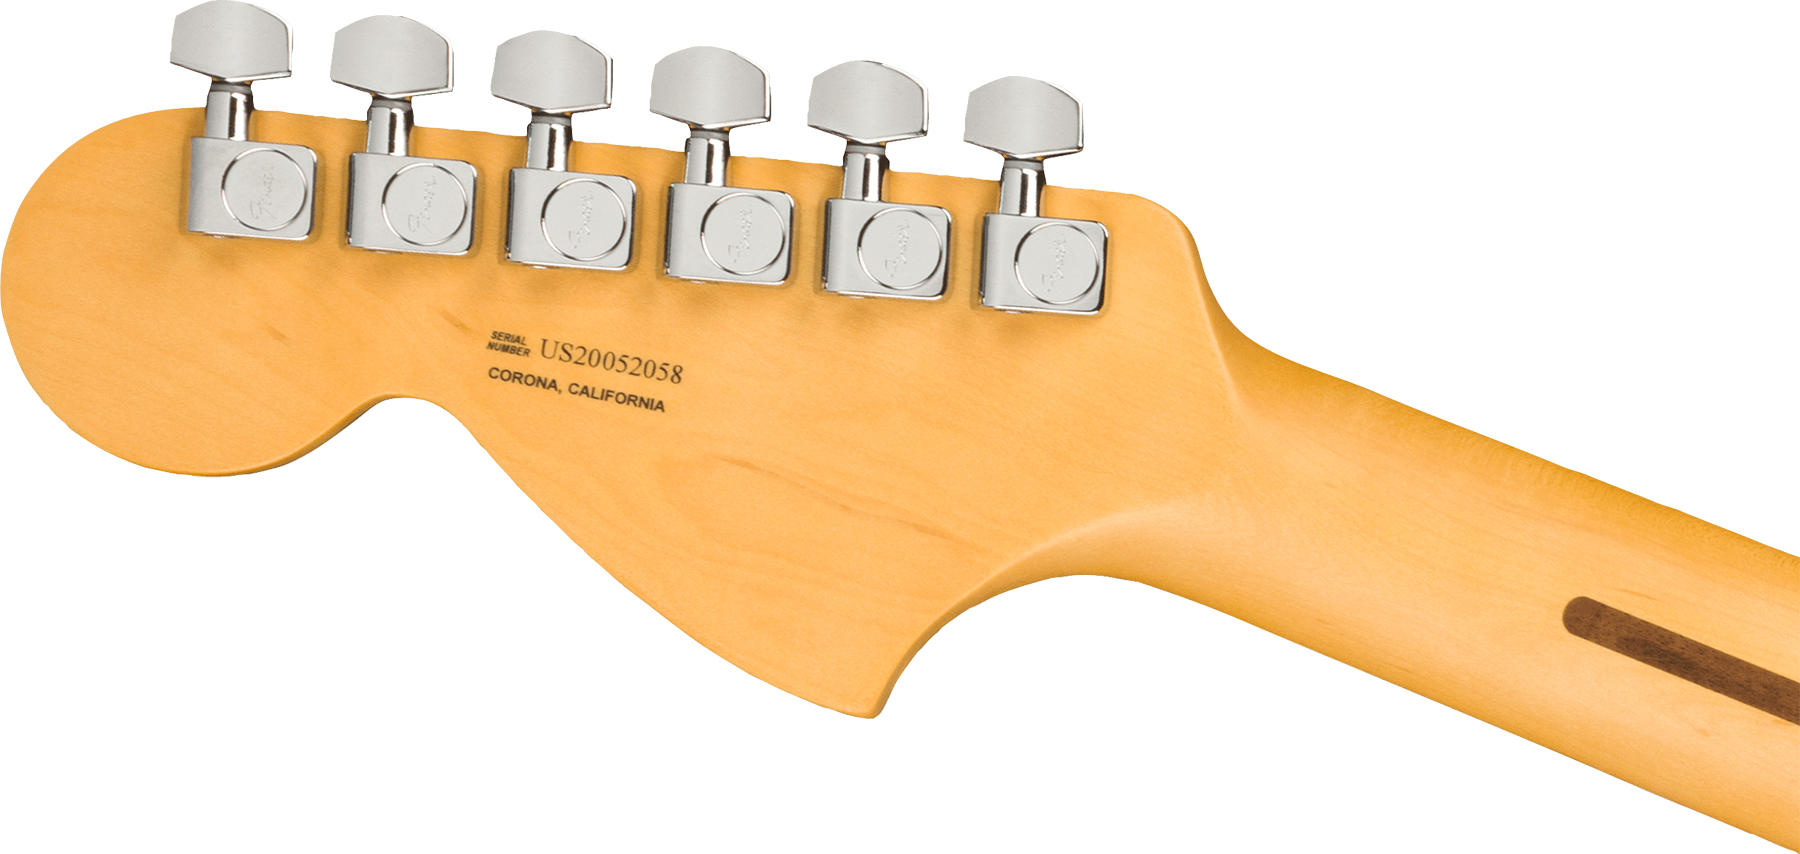 Fender Tele Deluxe American Professional Ii Usa Rw - 3-color Sunburst - Tel shape electric guitar - Variation 1